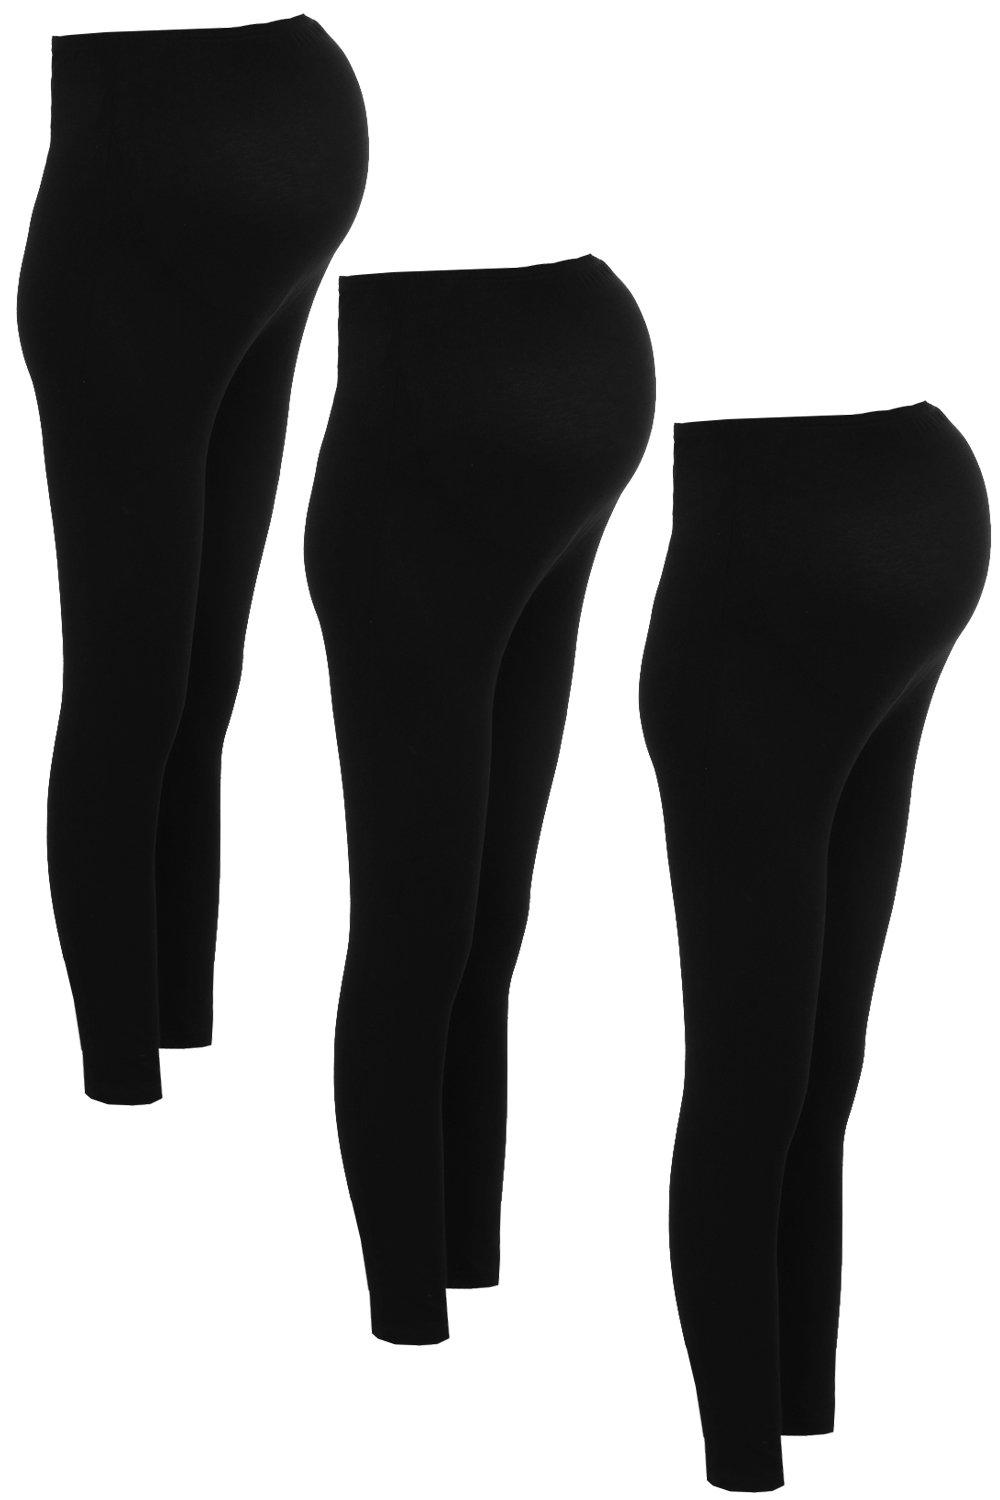 https://media.boohoo.com/i/boohoo/bzz48410_black_xl_2/female-black-maternity-3-pack-over-the-bump-leggings